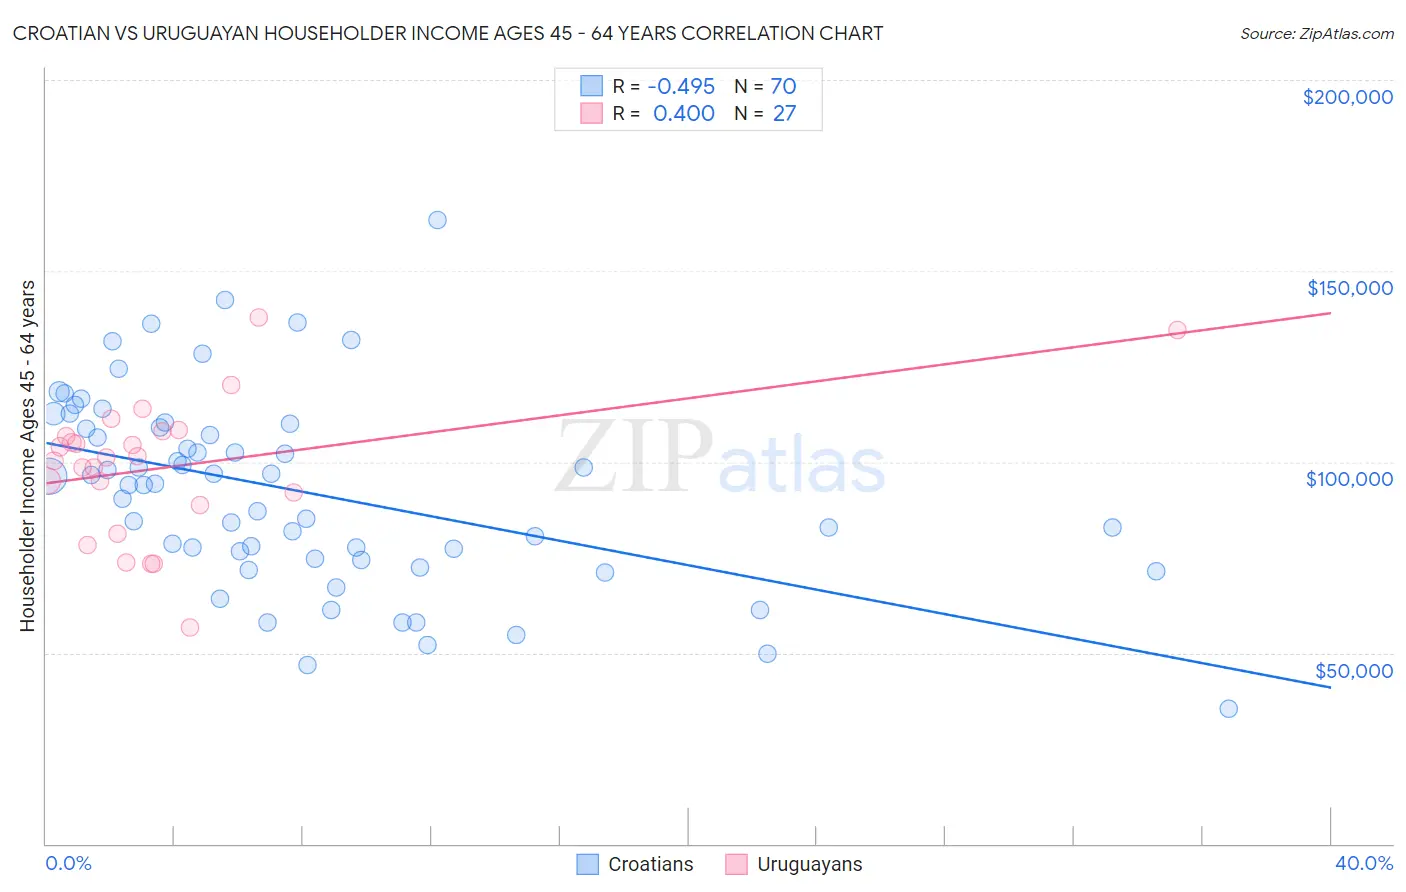 Croatian vs Uruguayan Householder Income Ages 45 - 64 years